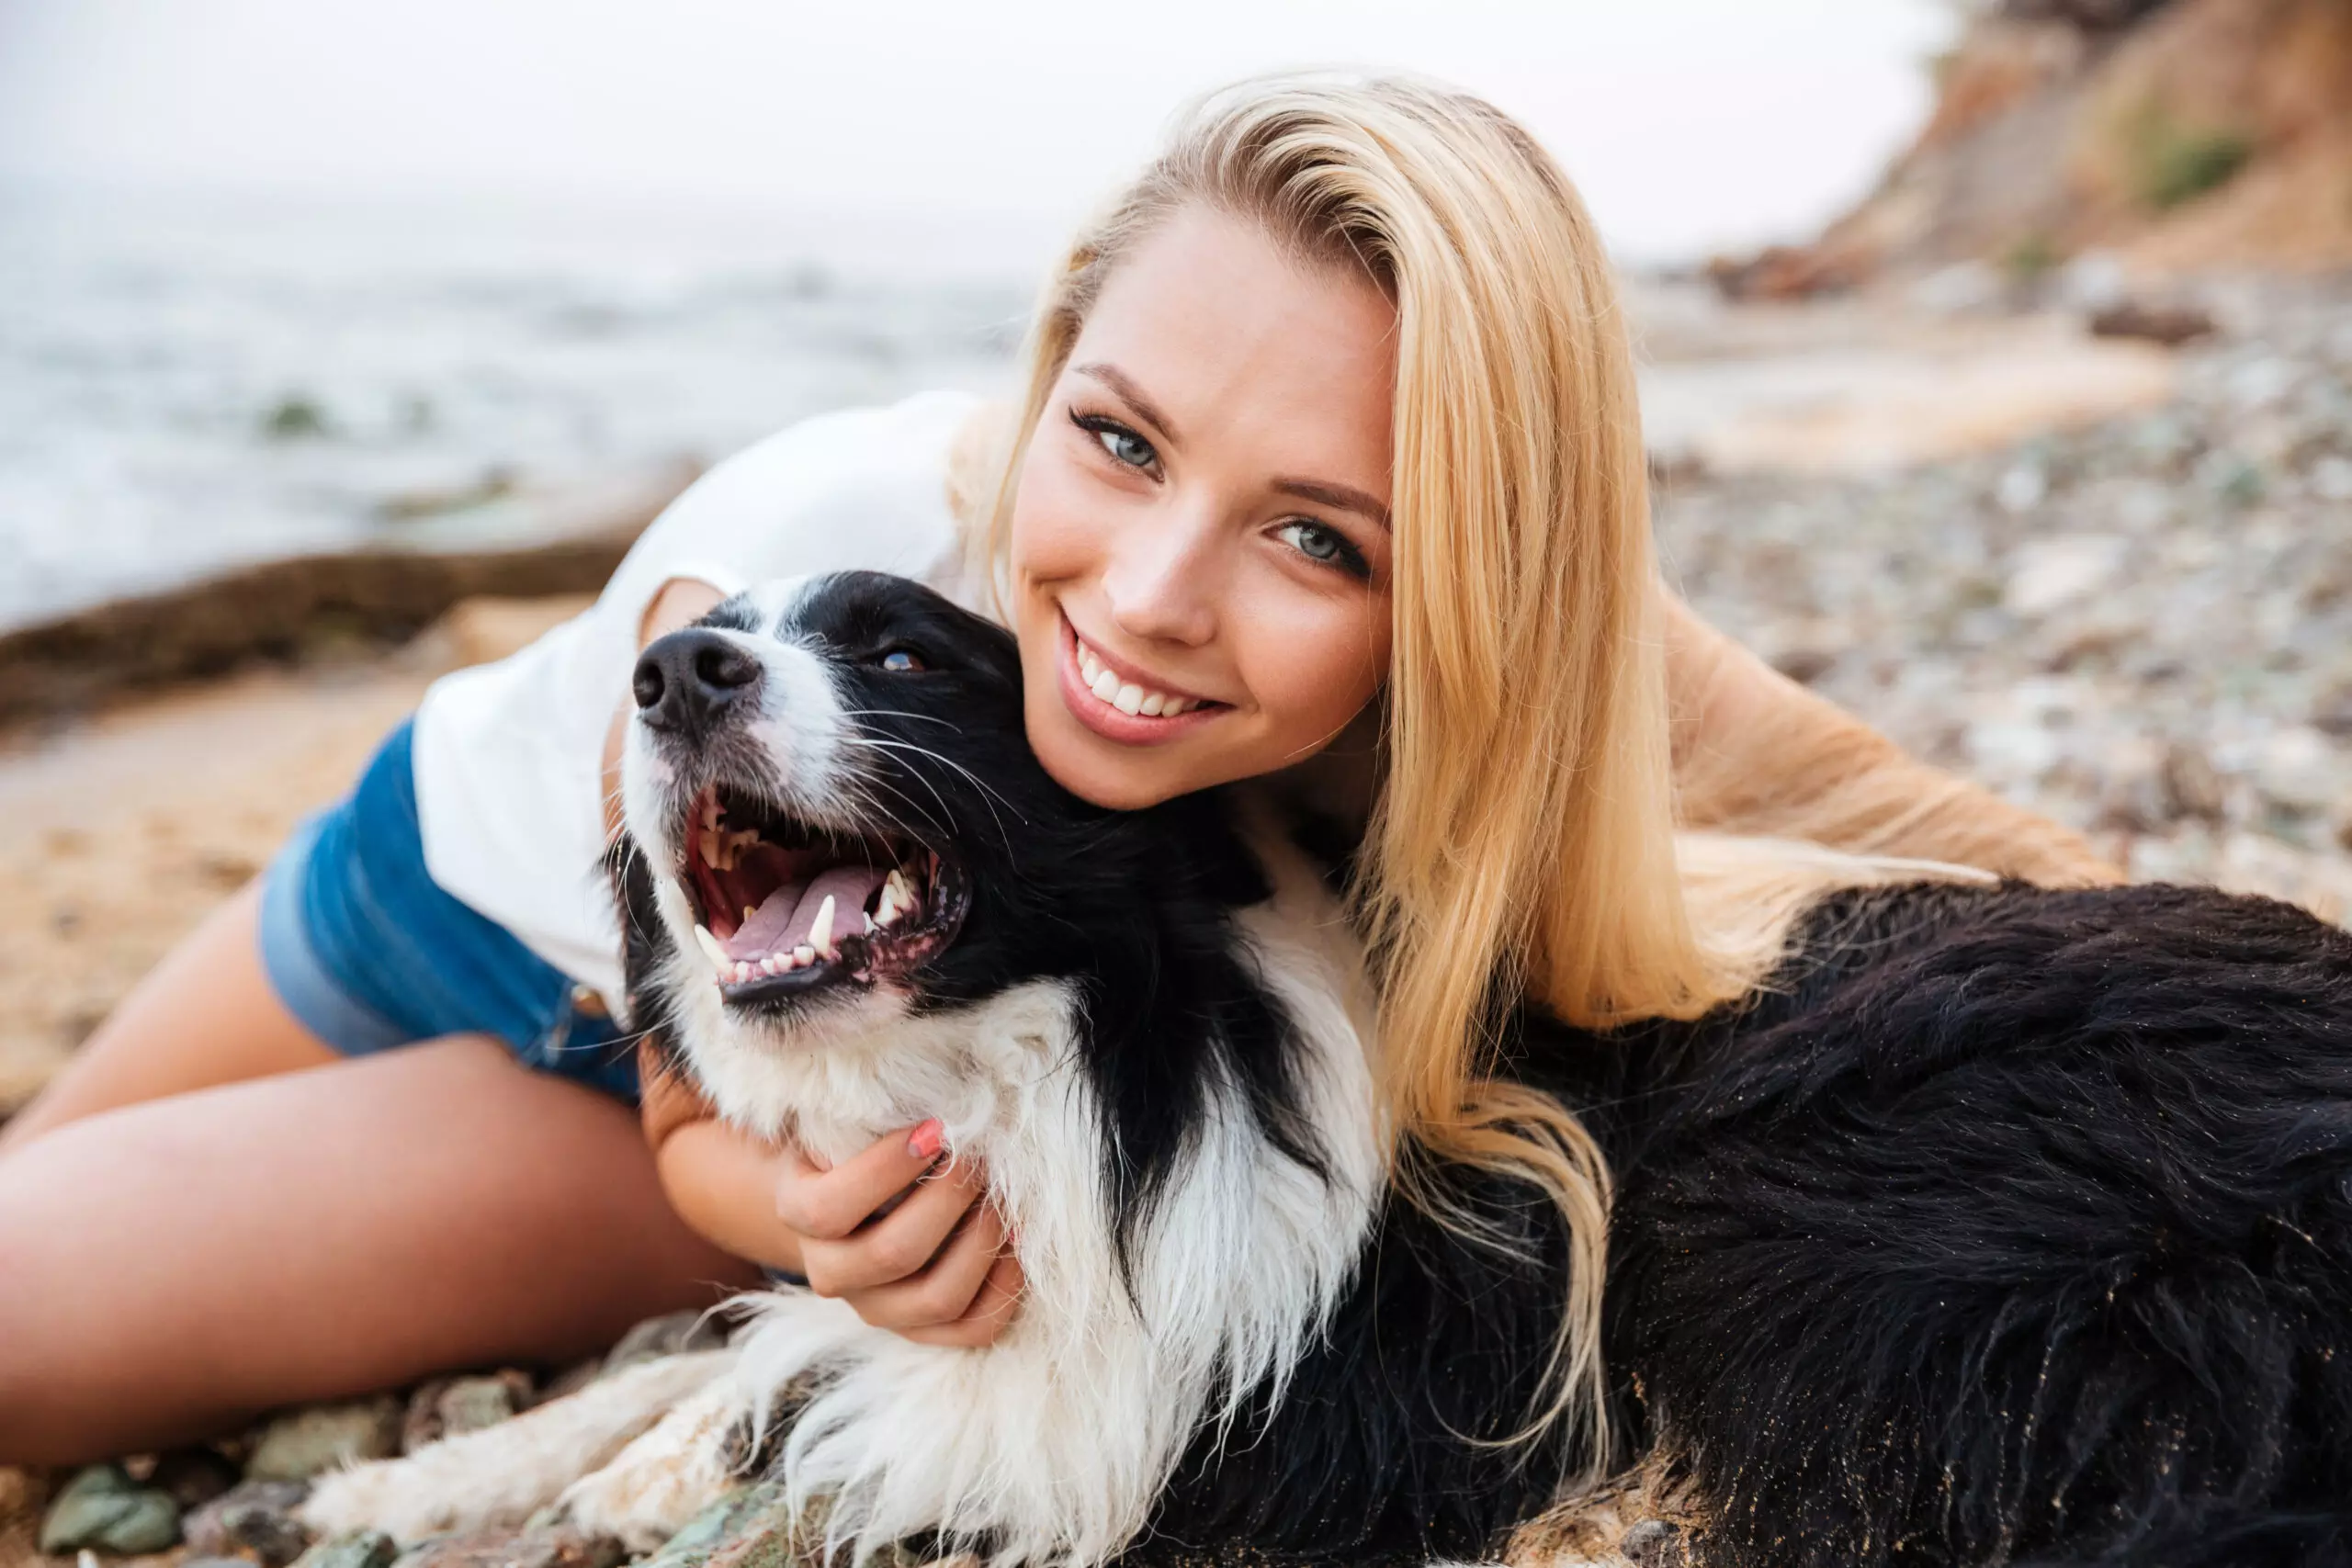 Woman and dog enjoying beach time.